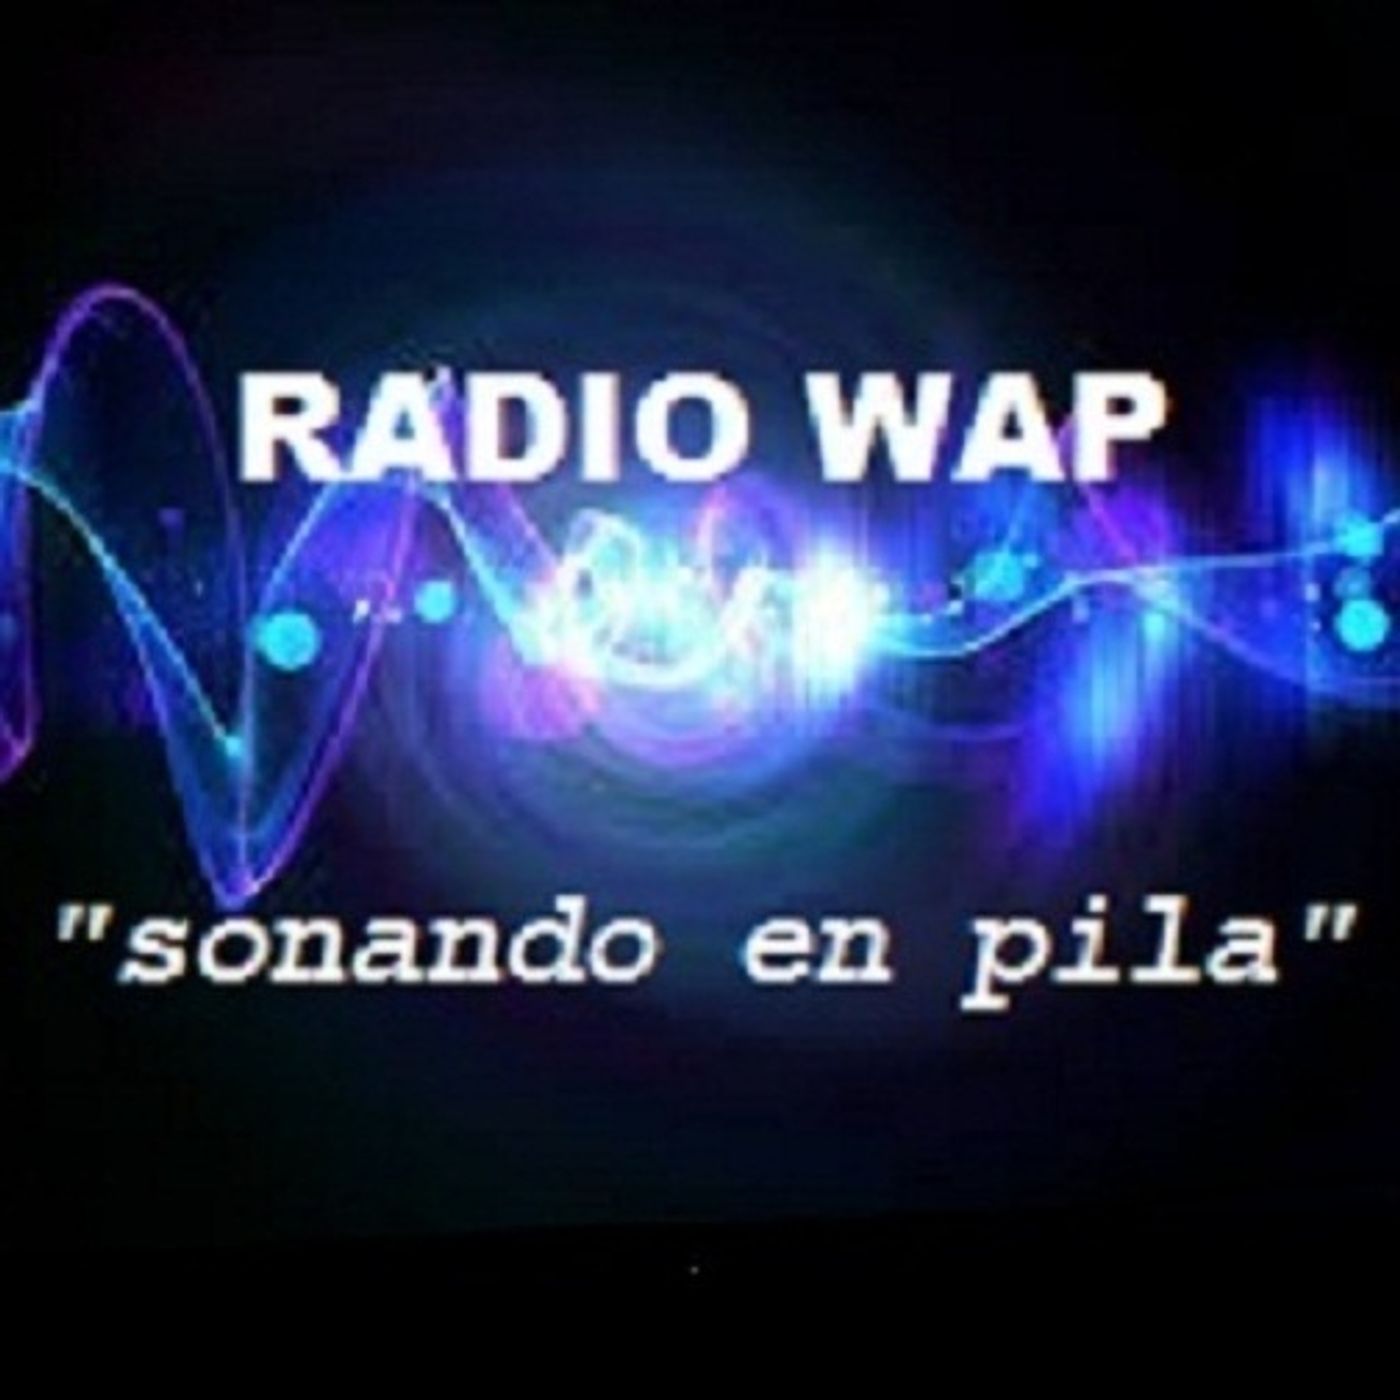 RADIO WAP's show